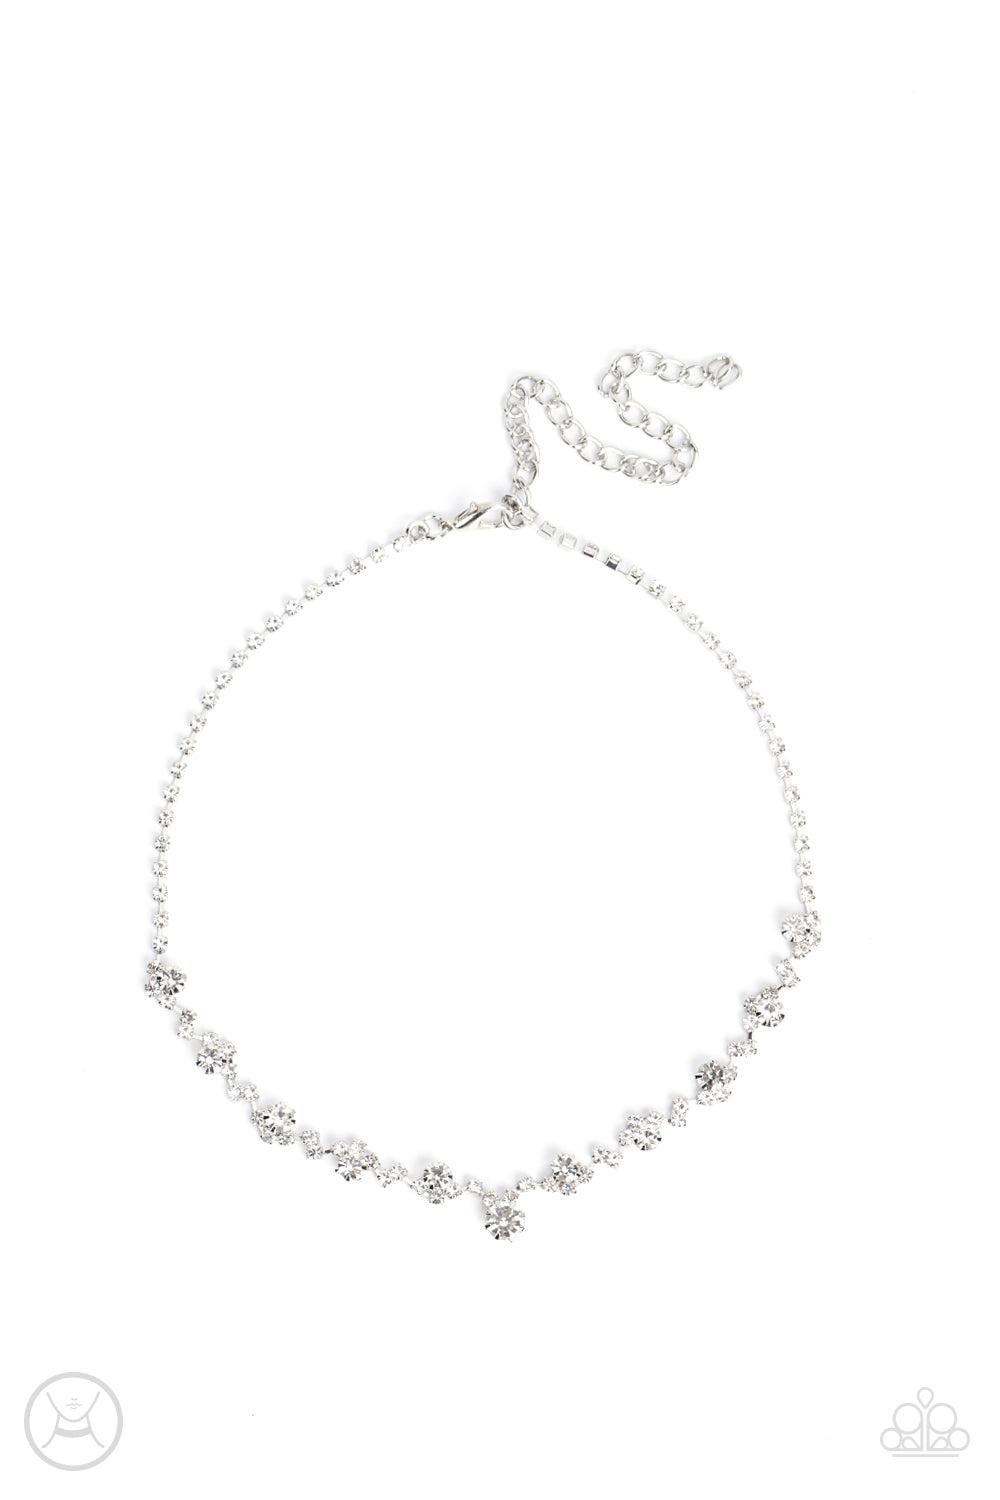 Regal Rebel White Rhinestone Choker Necklace - Paparazzi Accessories- lightbox - CarasShop.com - $5 Jewelry by Cara Jewels